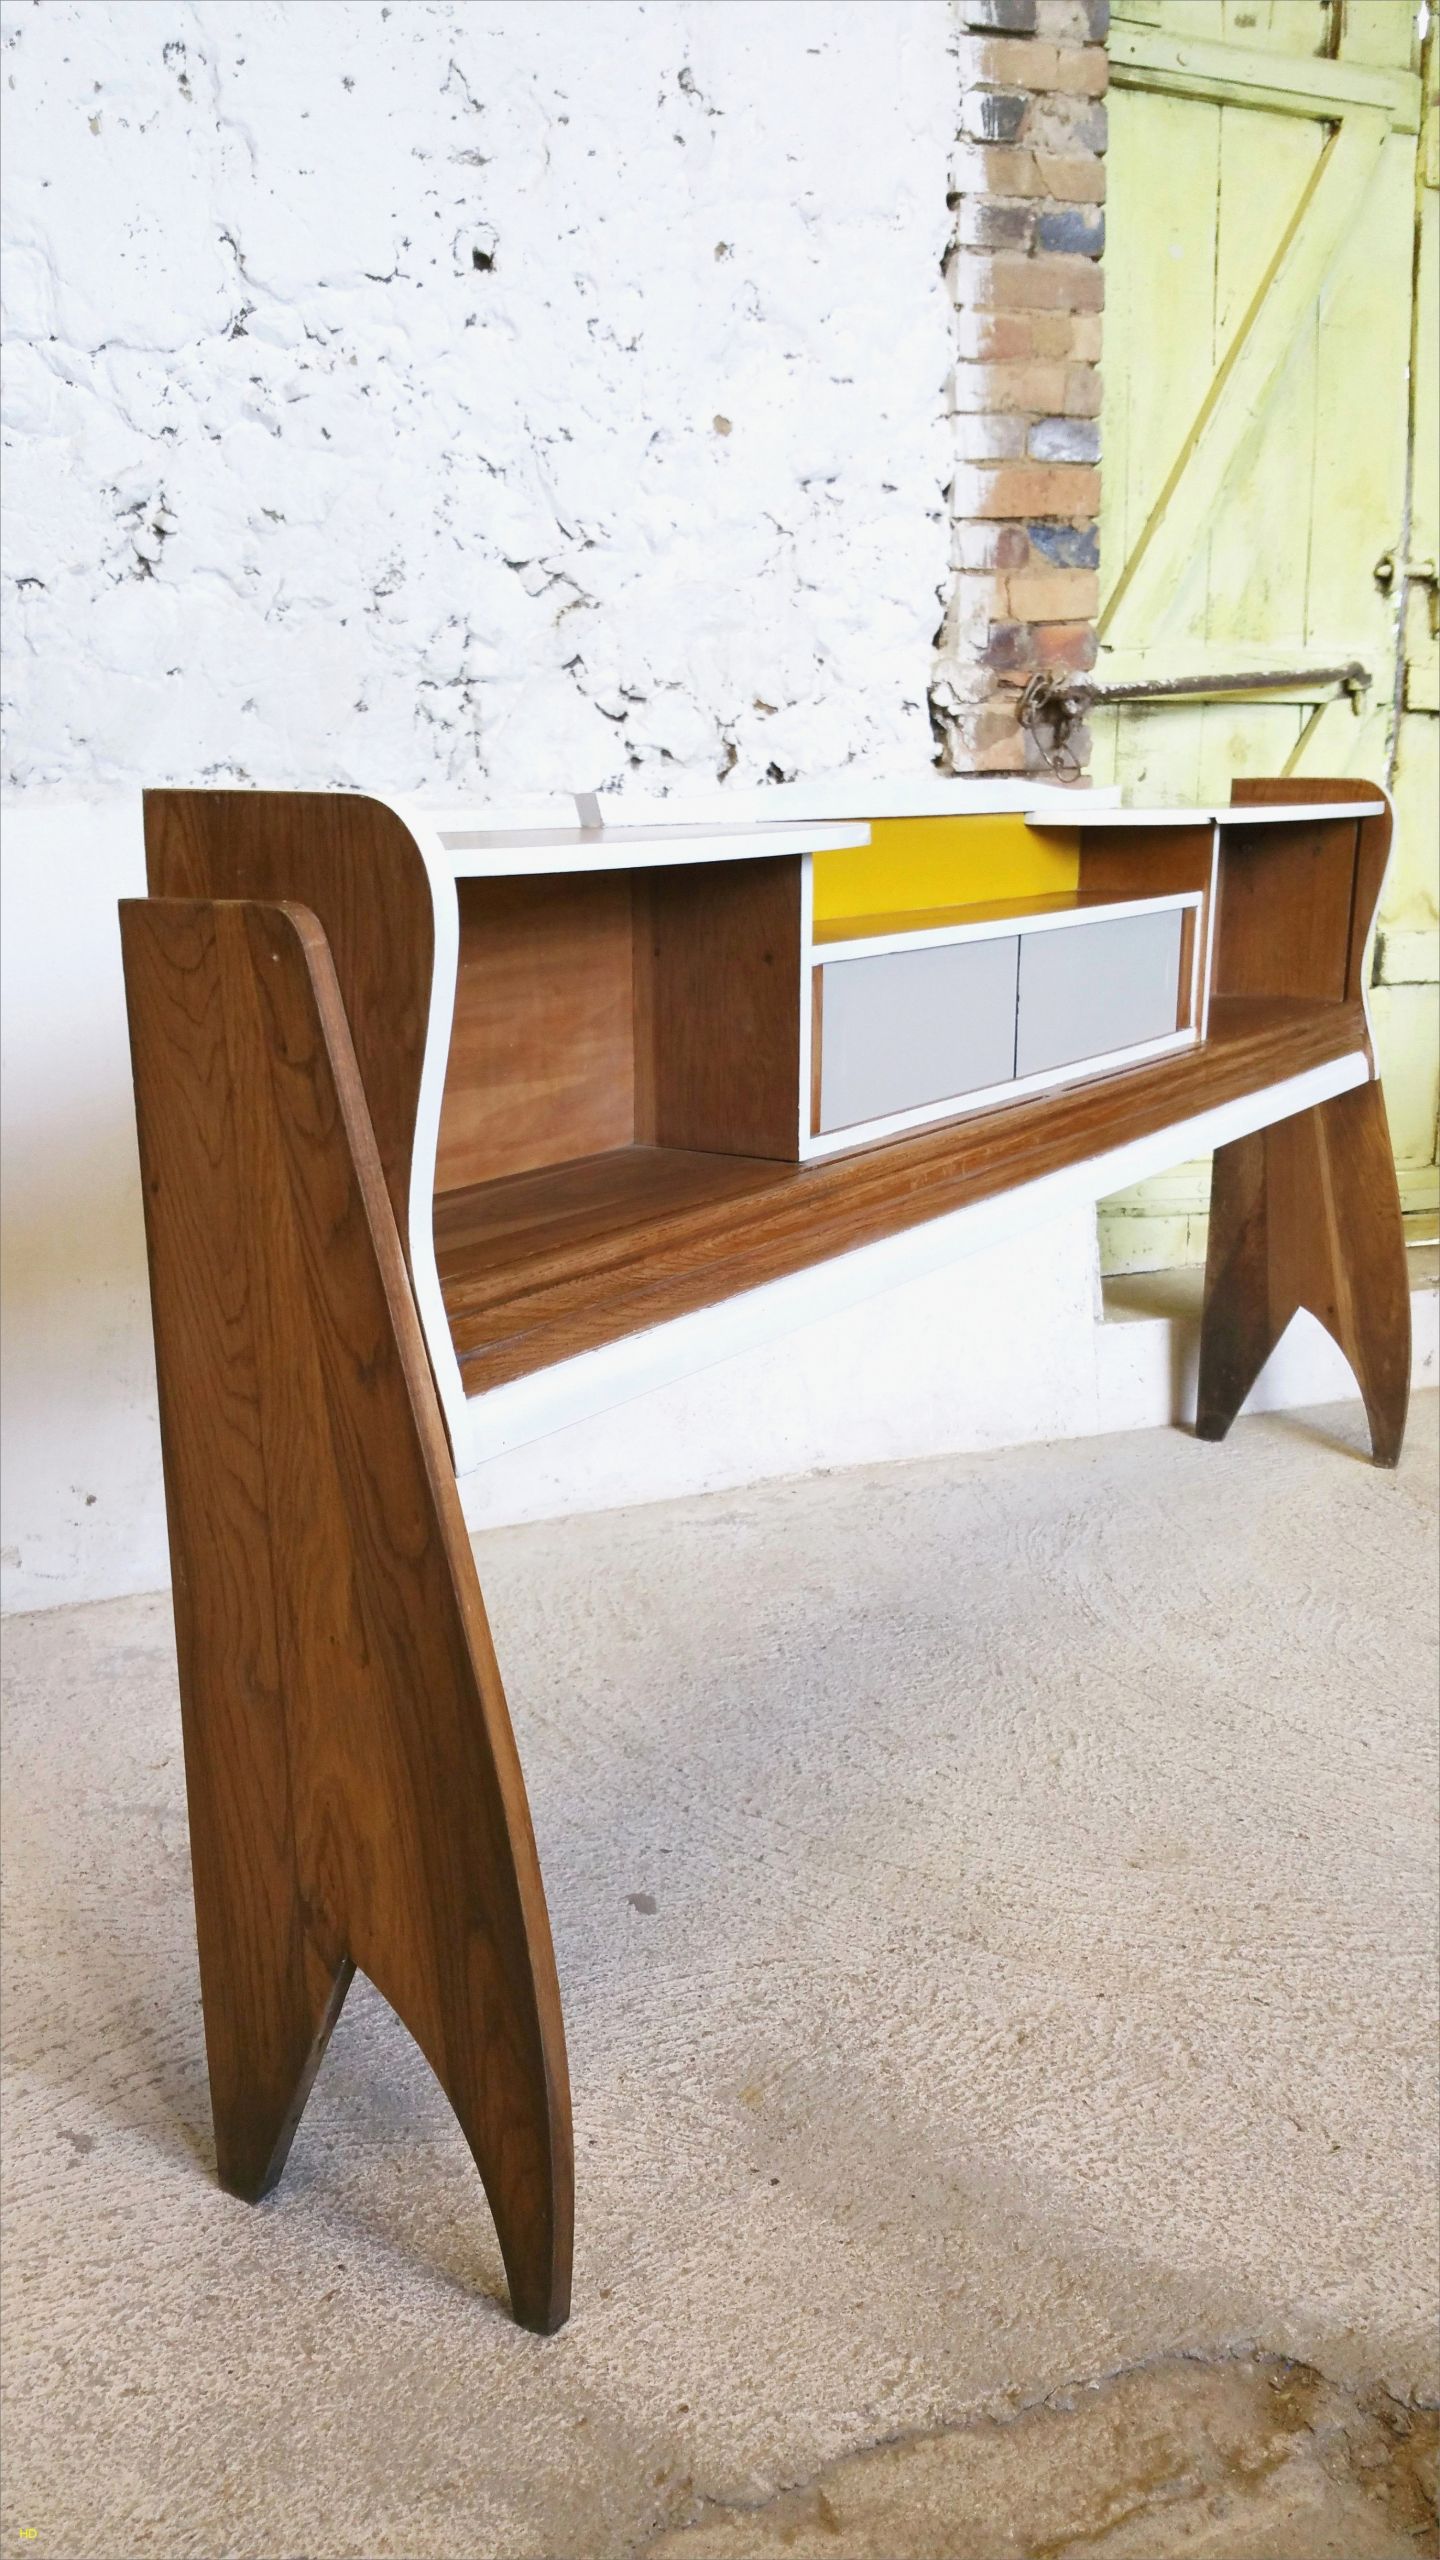 meuble bois design meuble bois design table basse design scandinave meilleur lit of meuble bois design